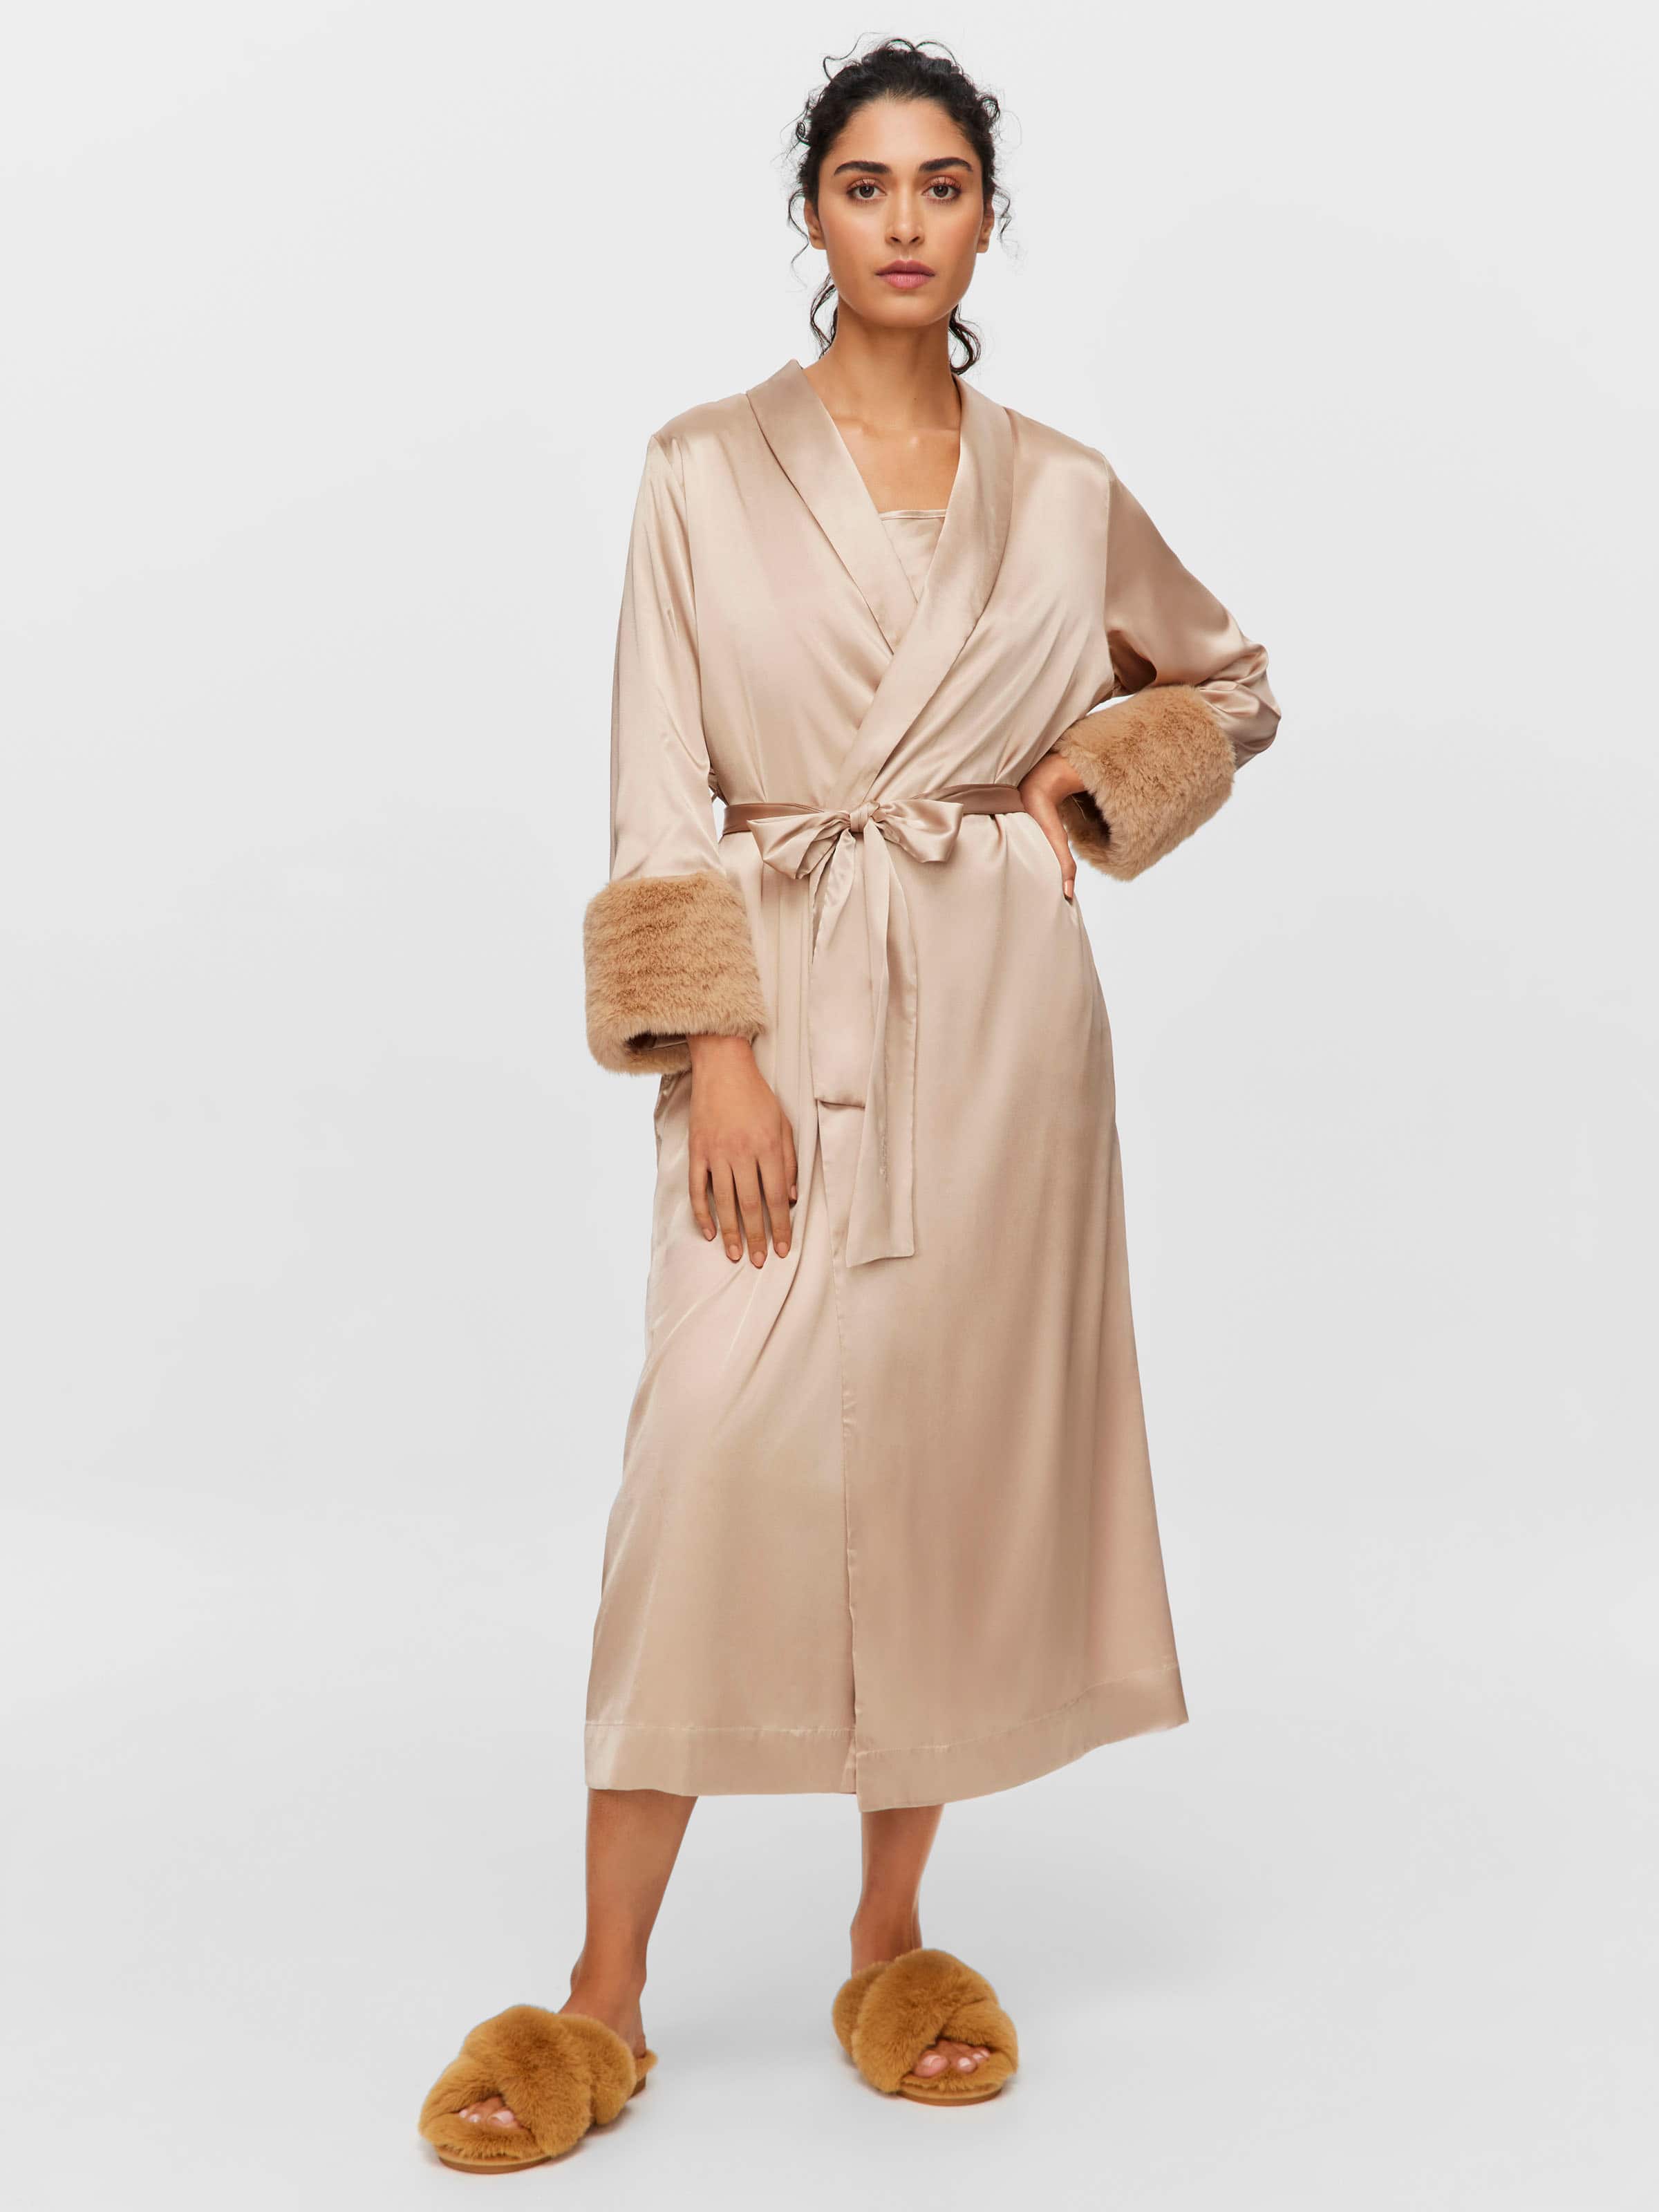 Women's Sleepwear & Robes | Garnet Hill